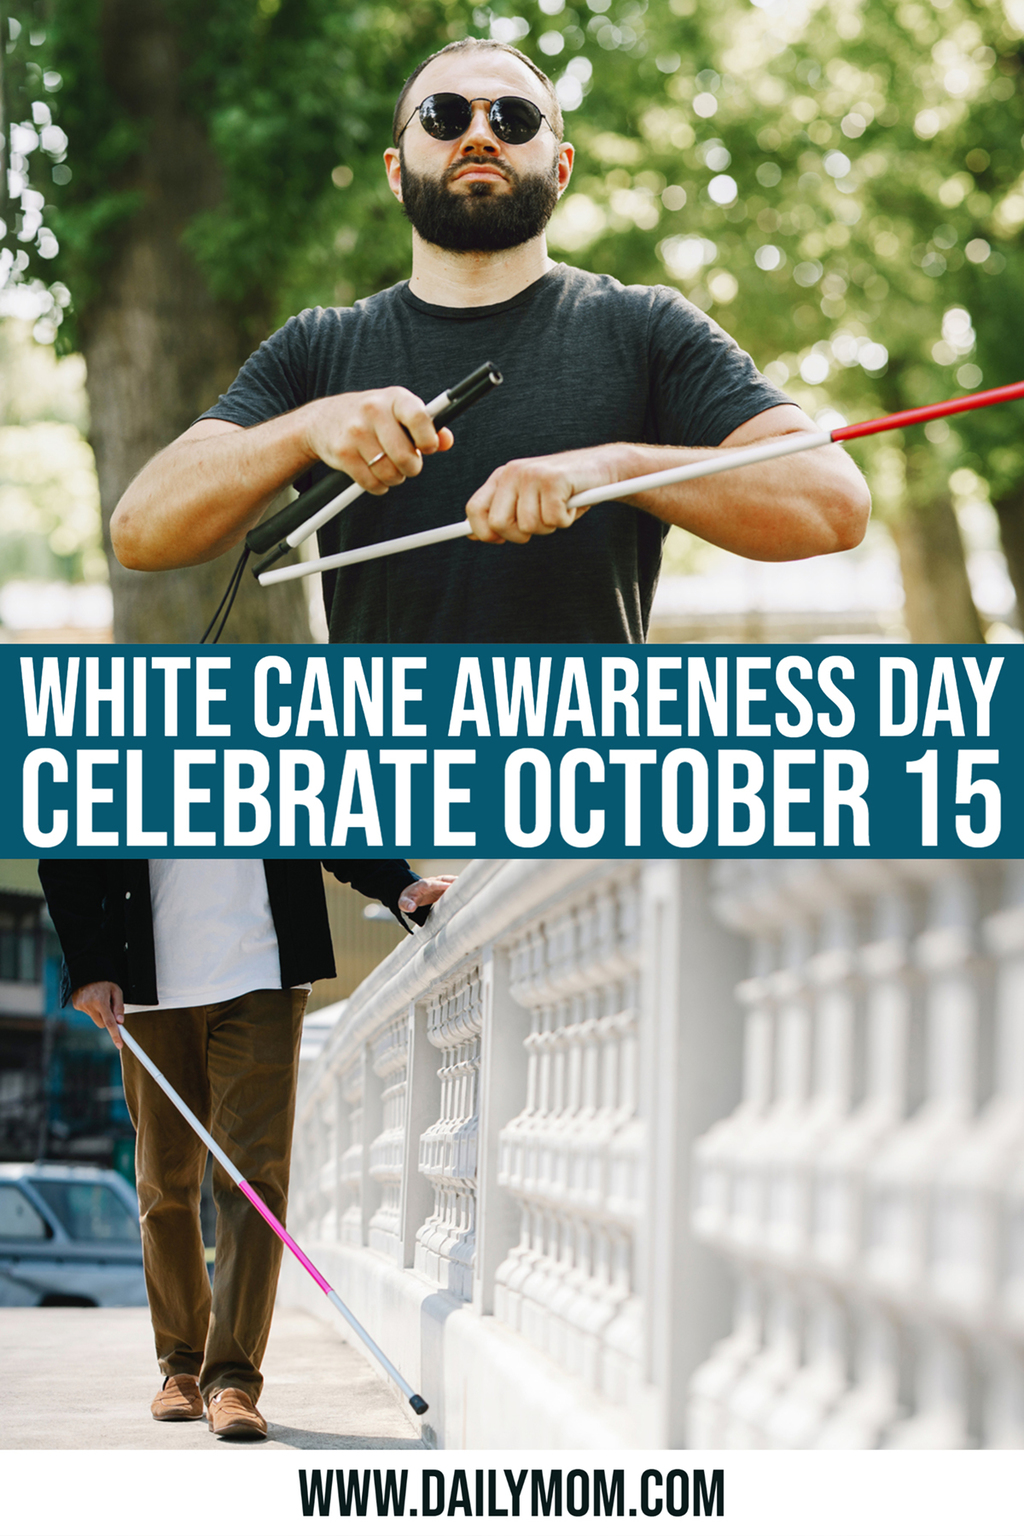 Celebrate White Cane Awareness Day October 15